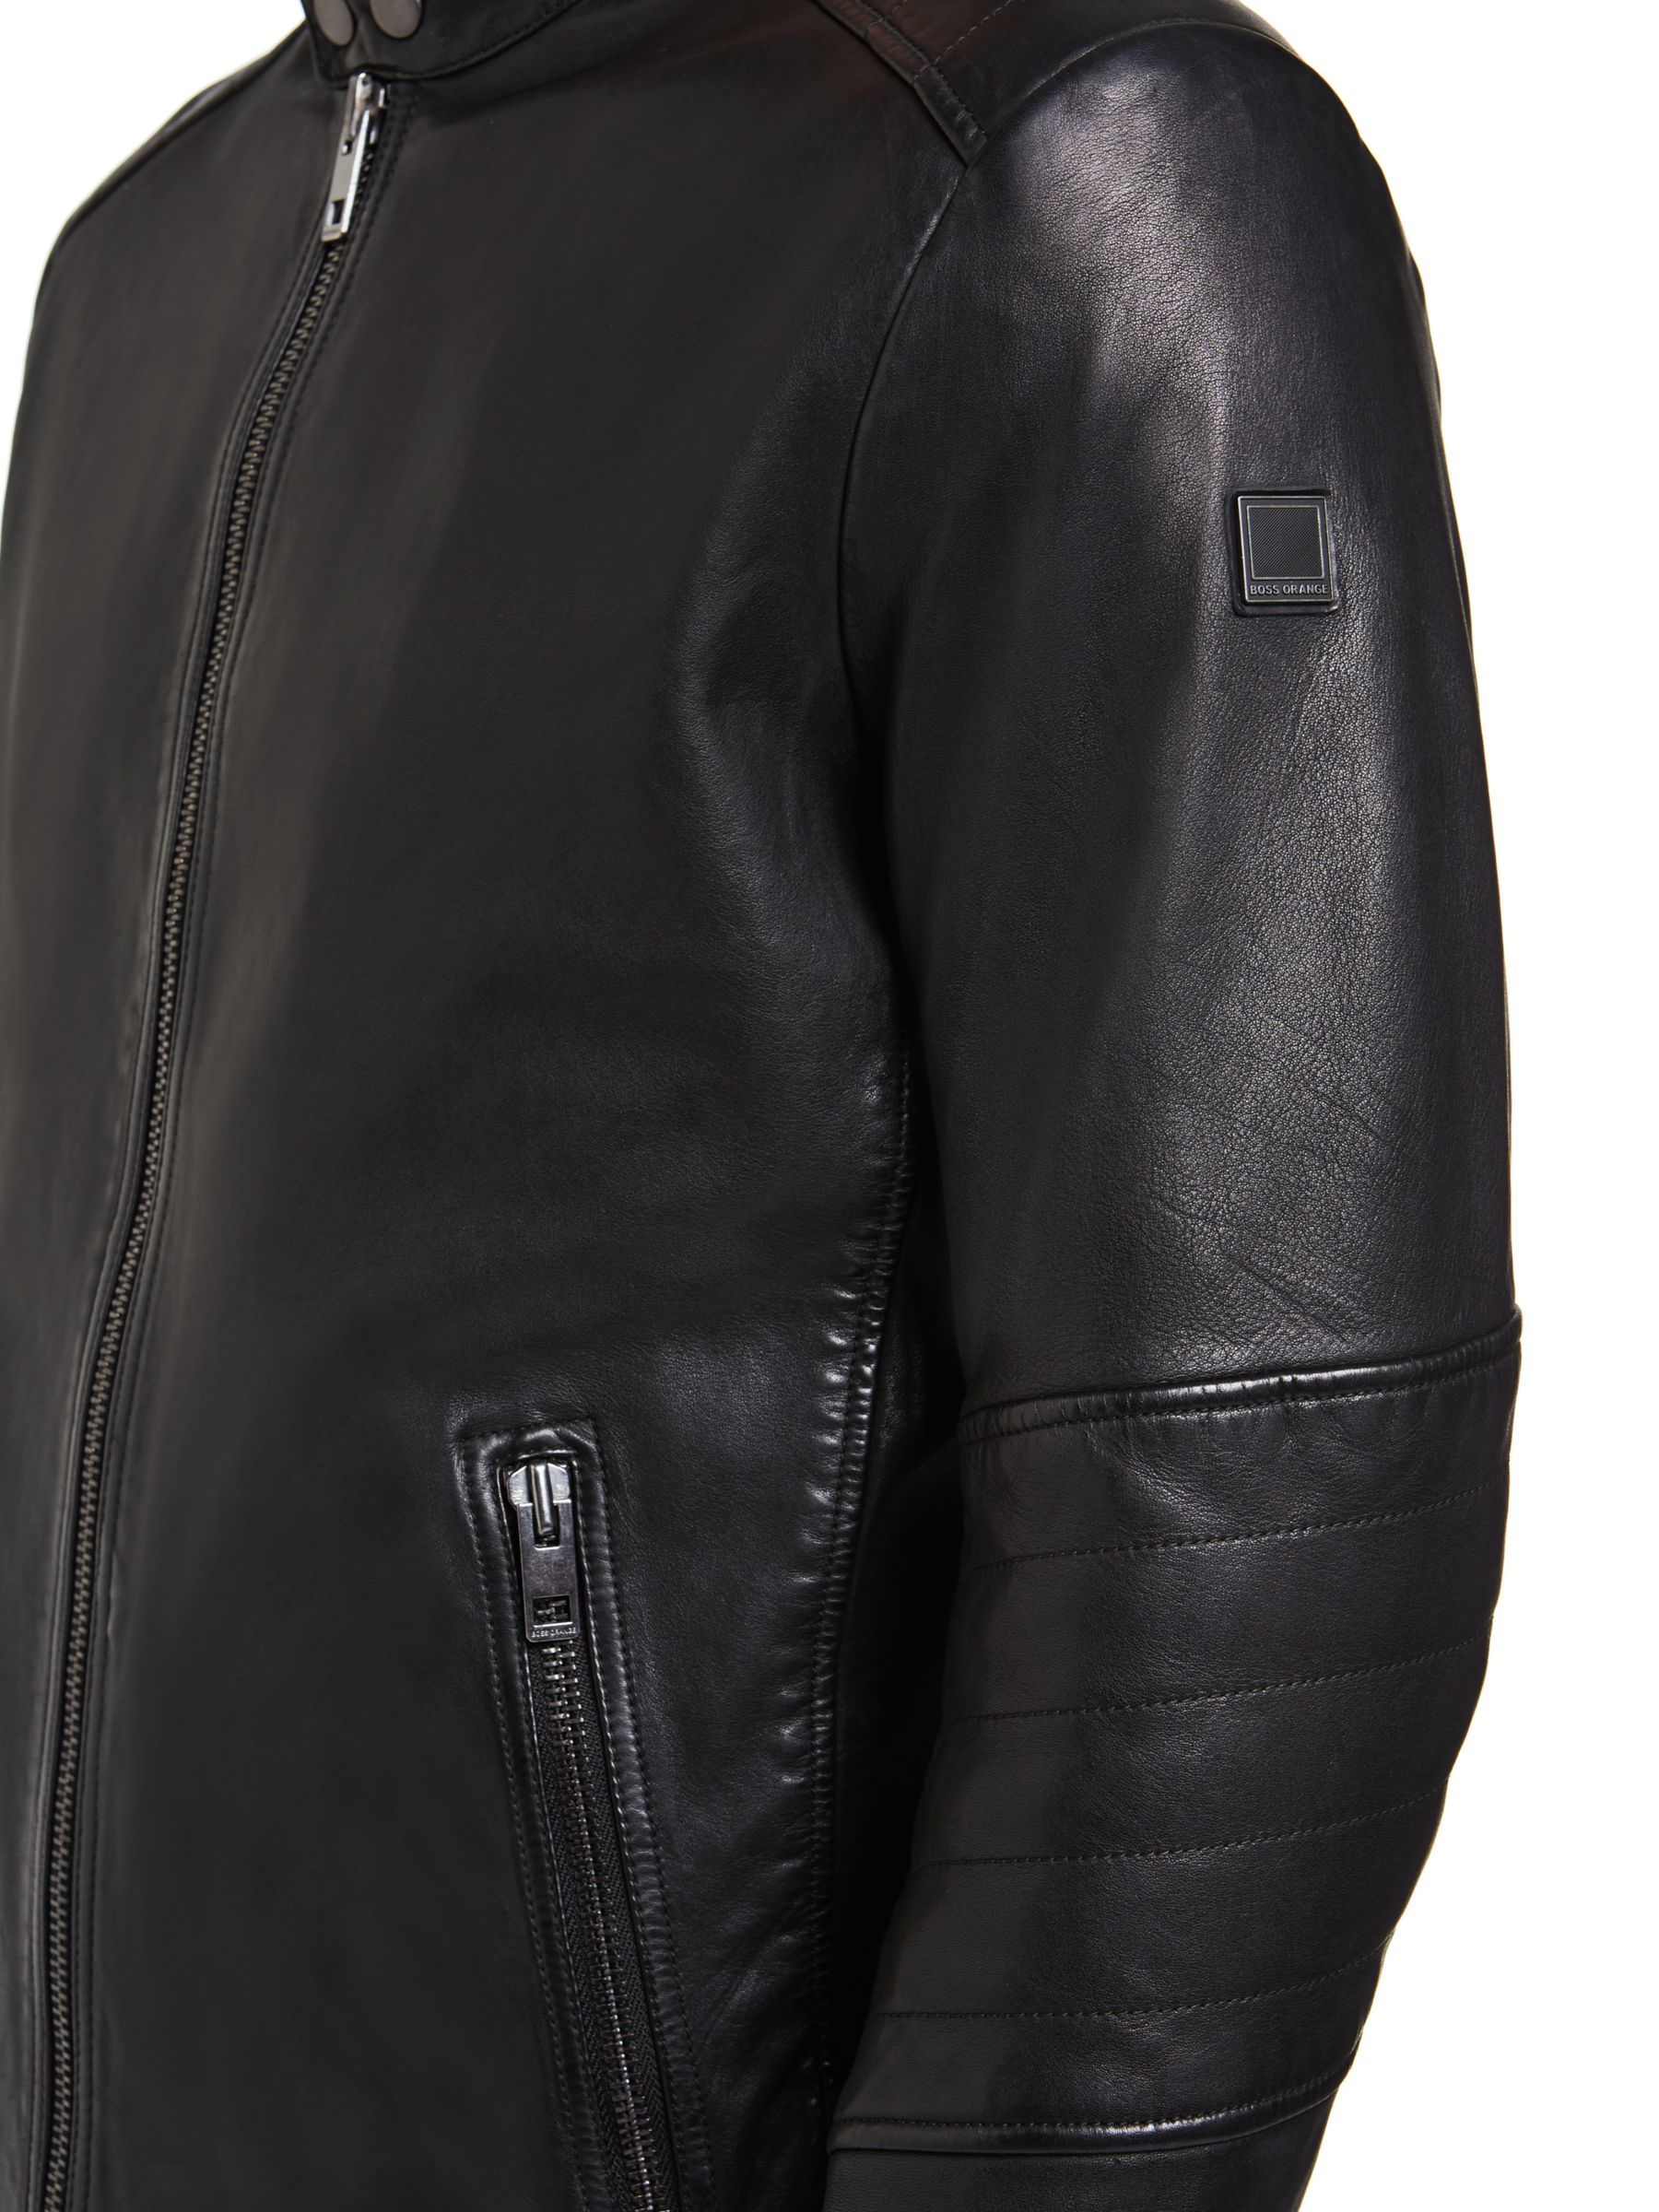 hugo boss leather jacket sale